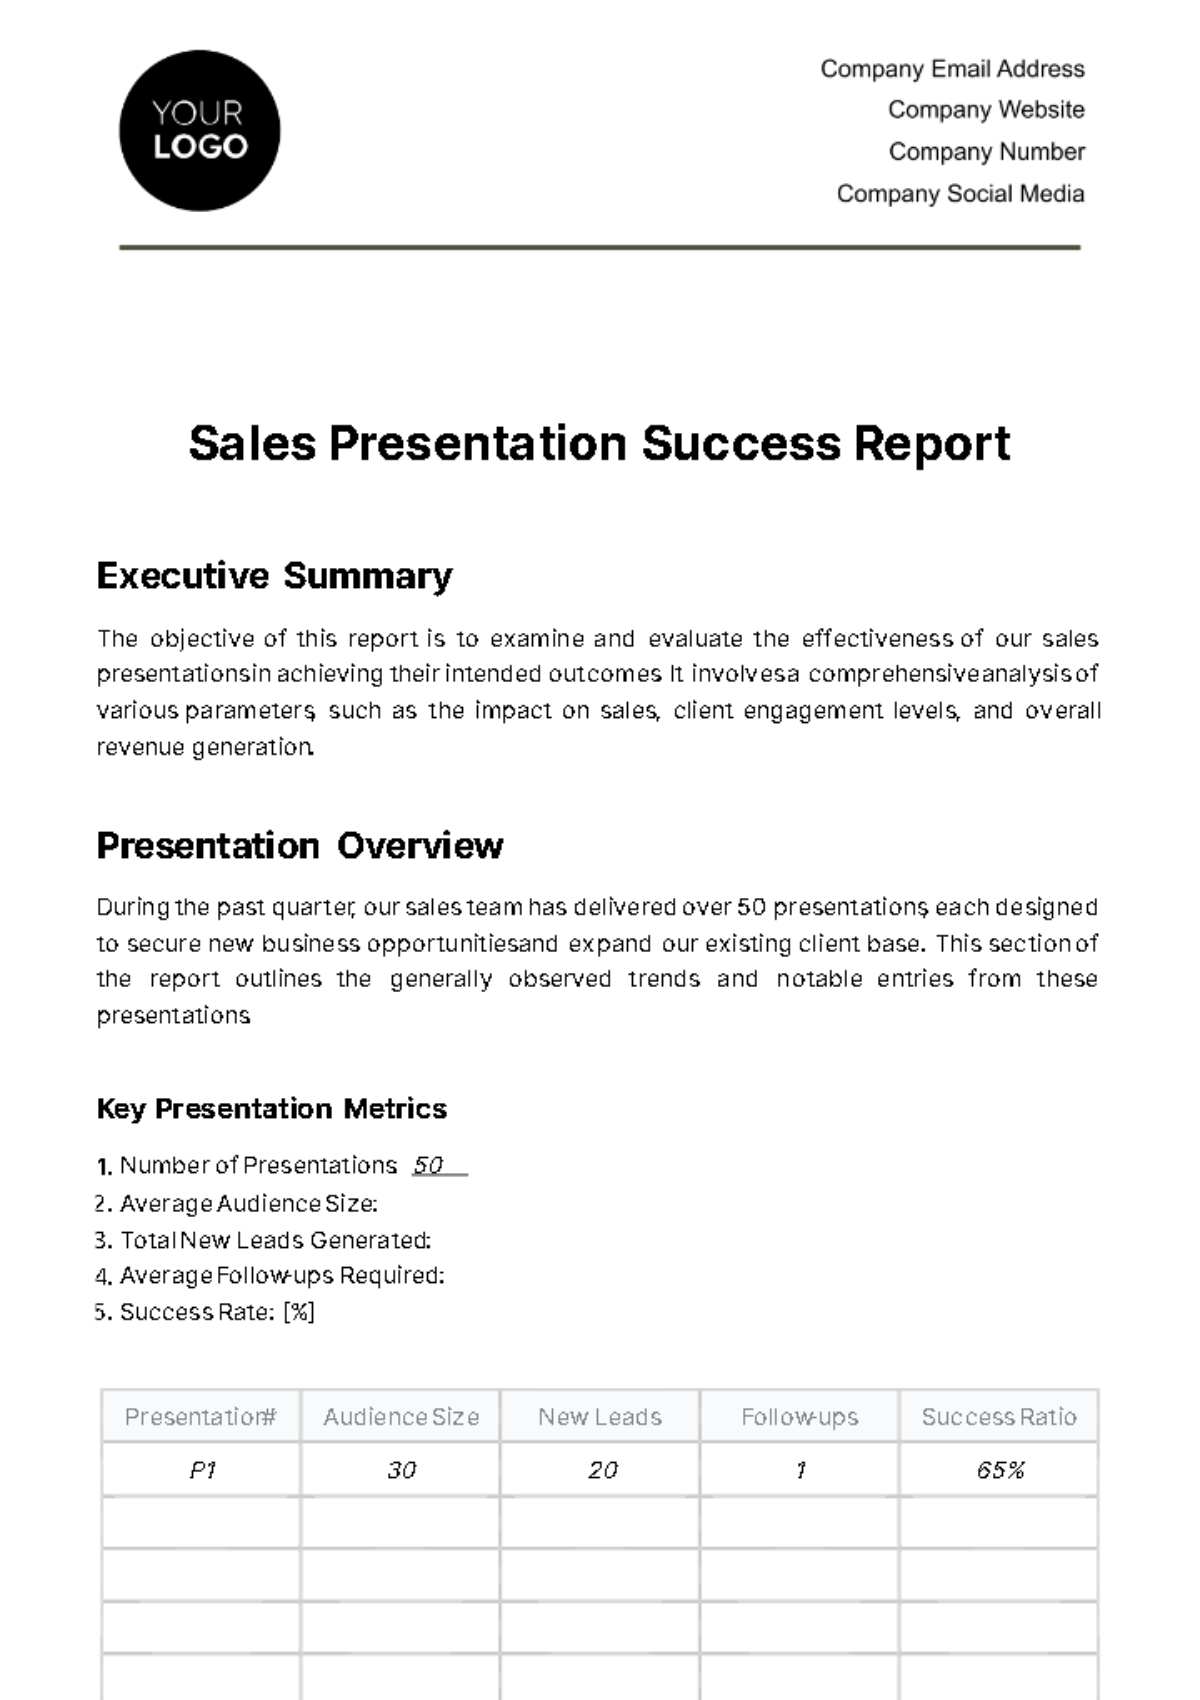 Free Sales Presentation Success Report Template